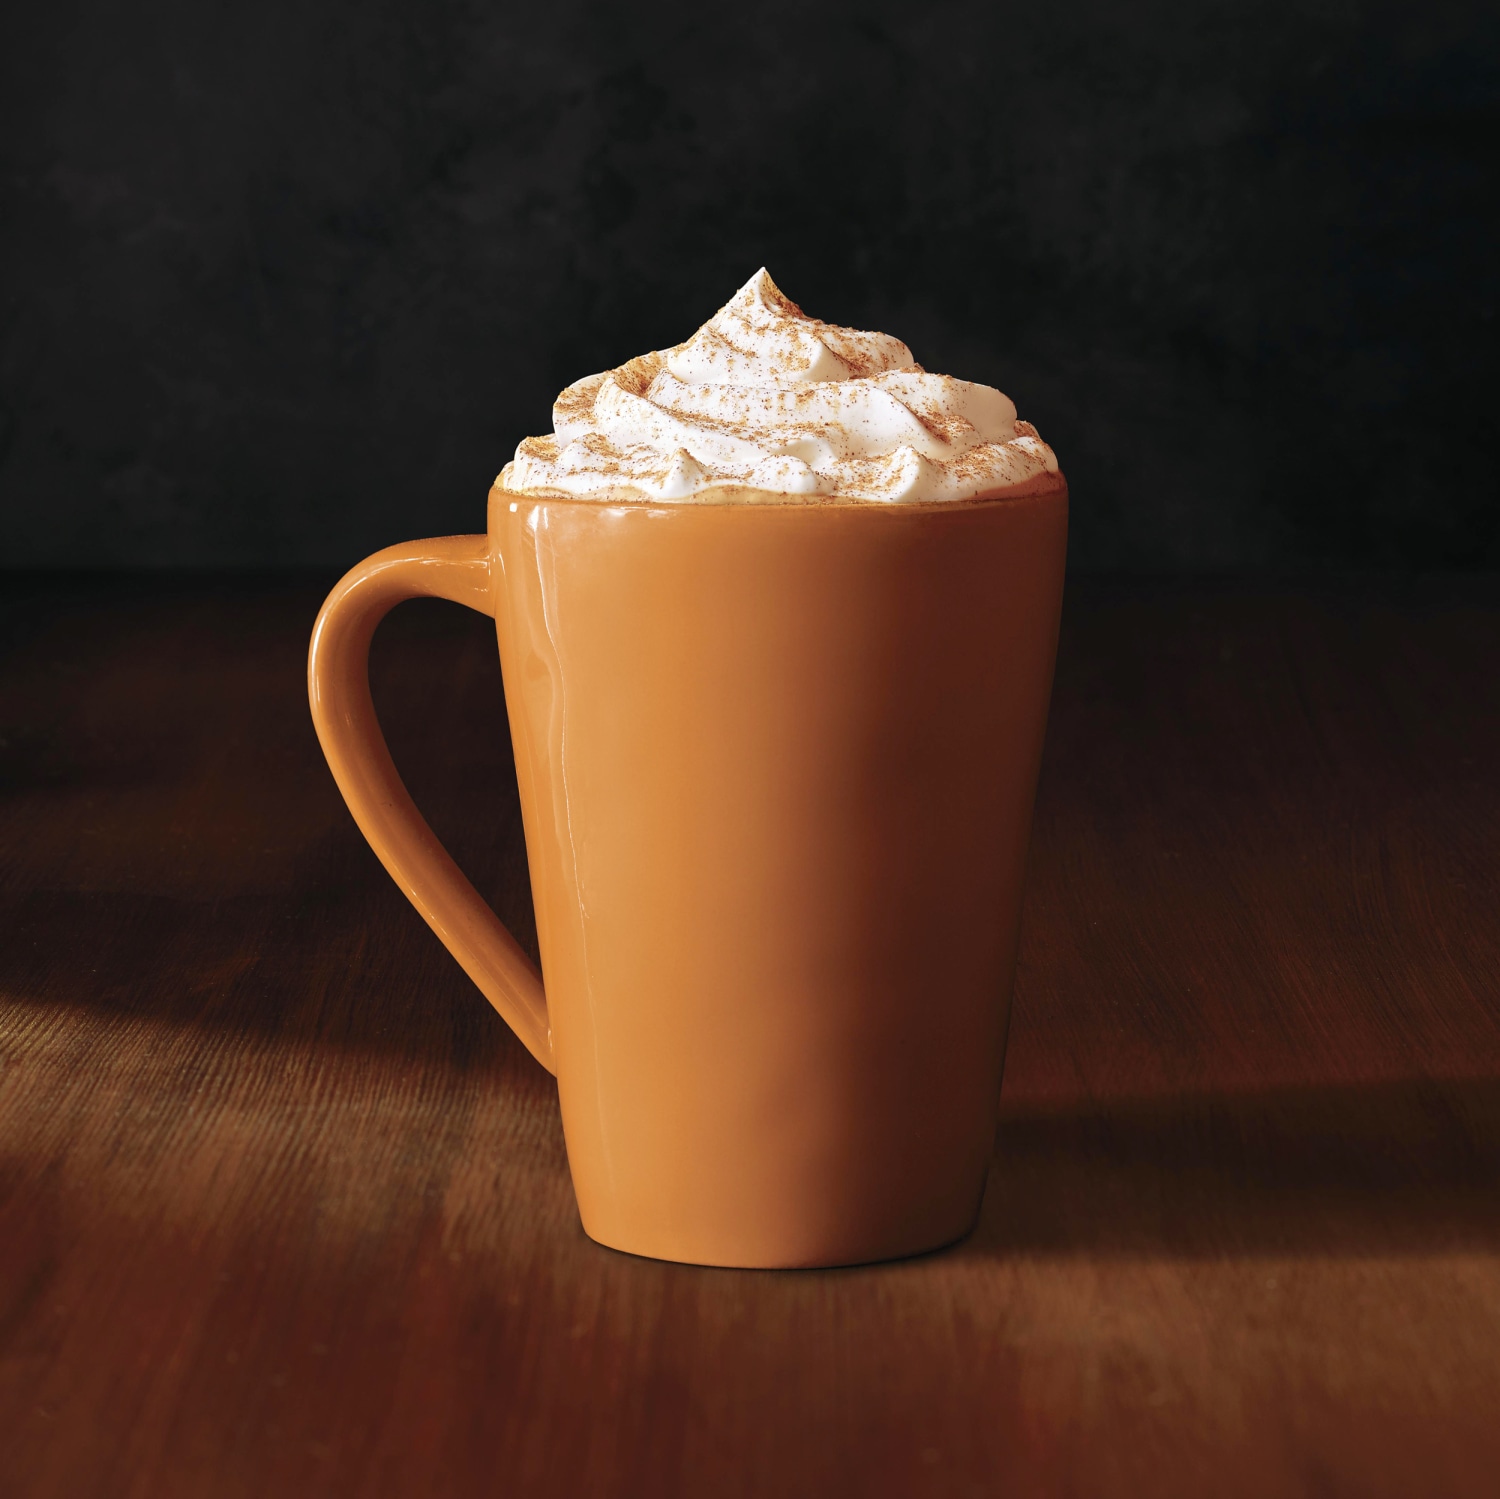 emma's pumpkin spice latte 